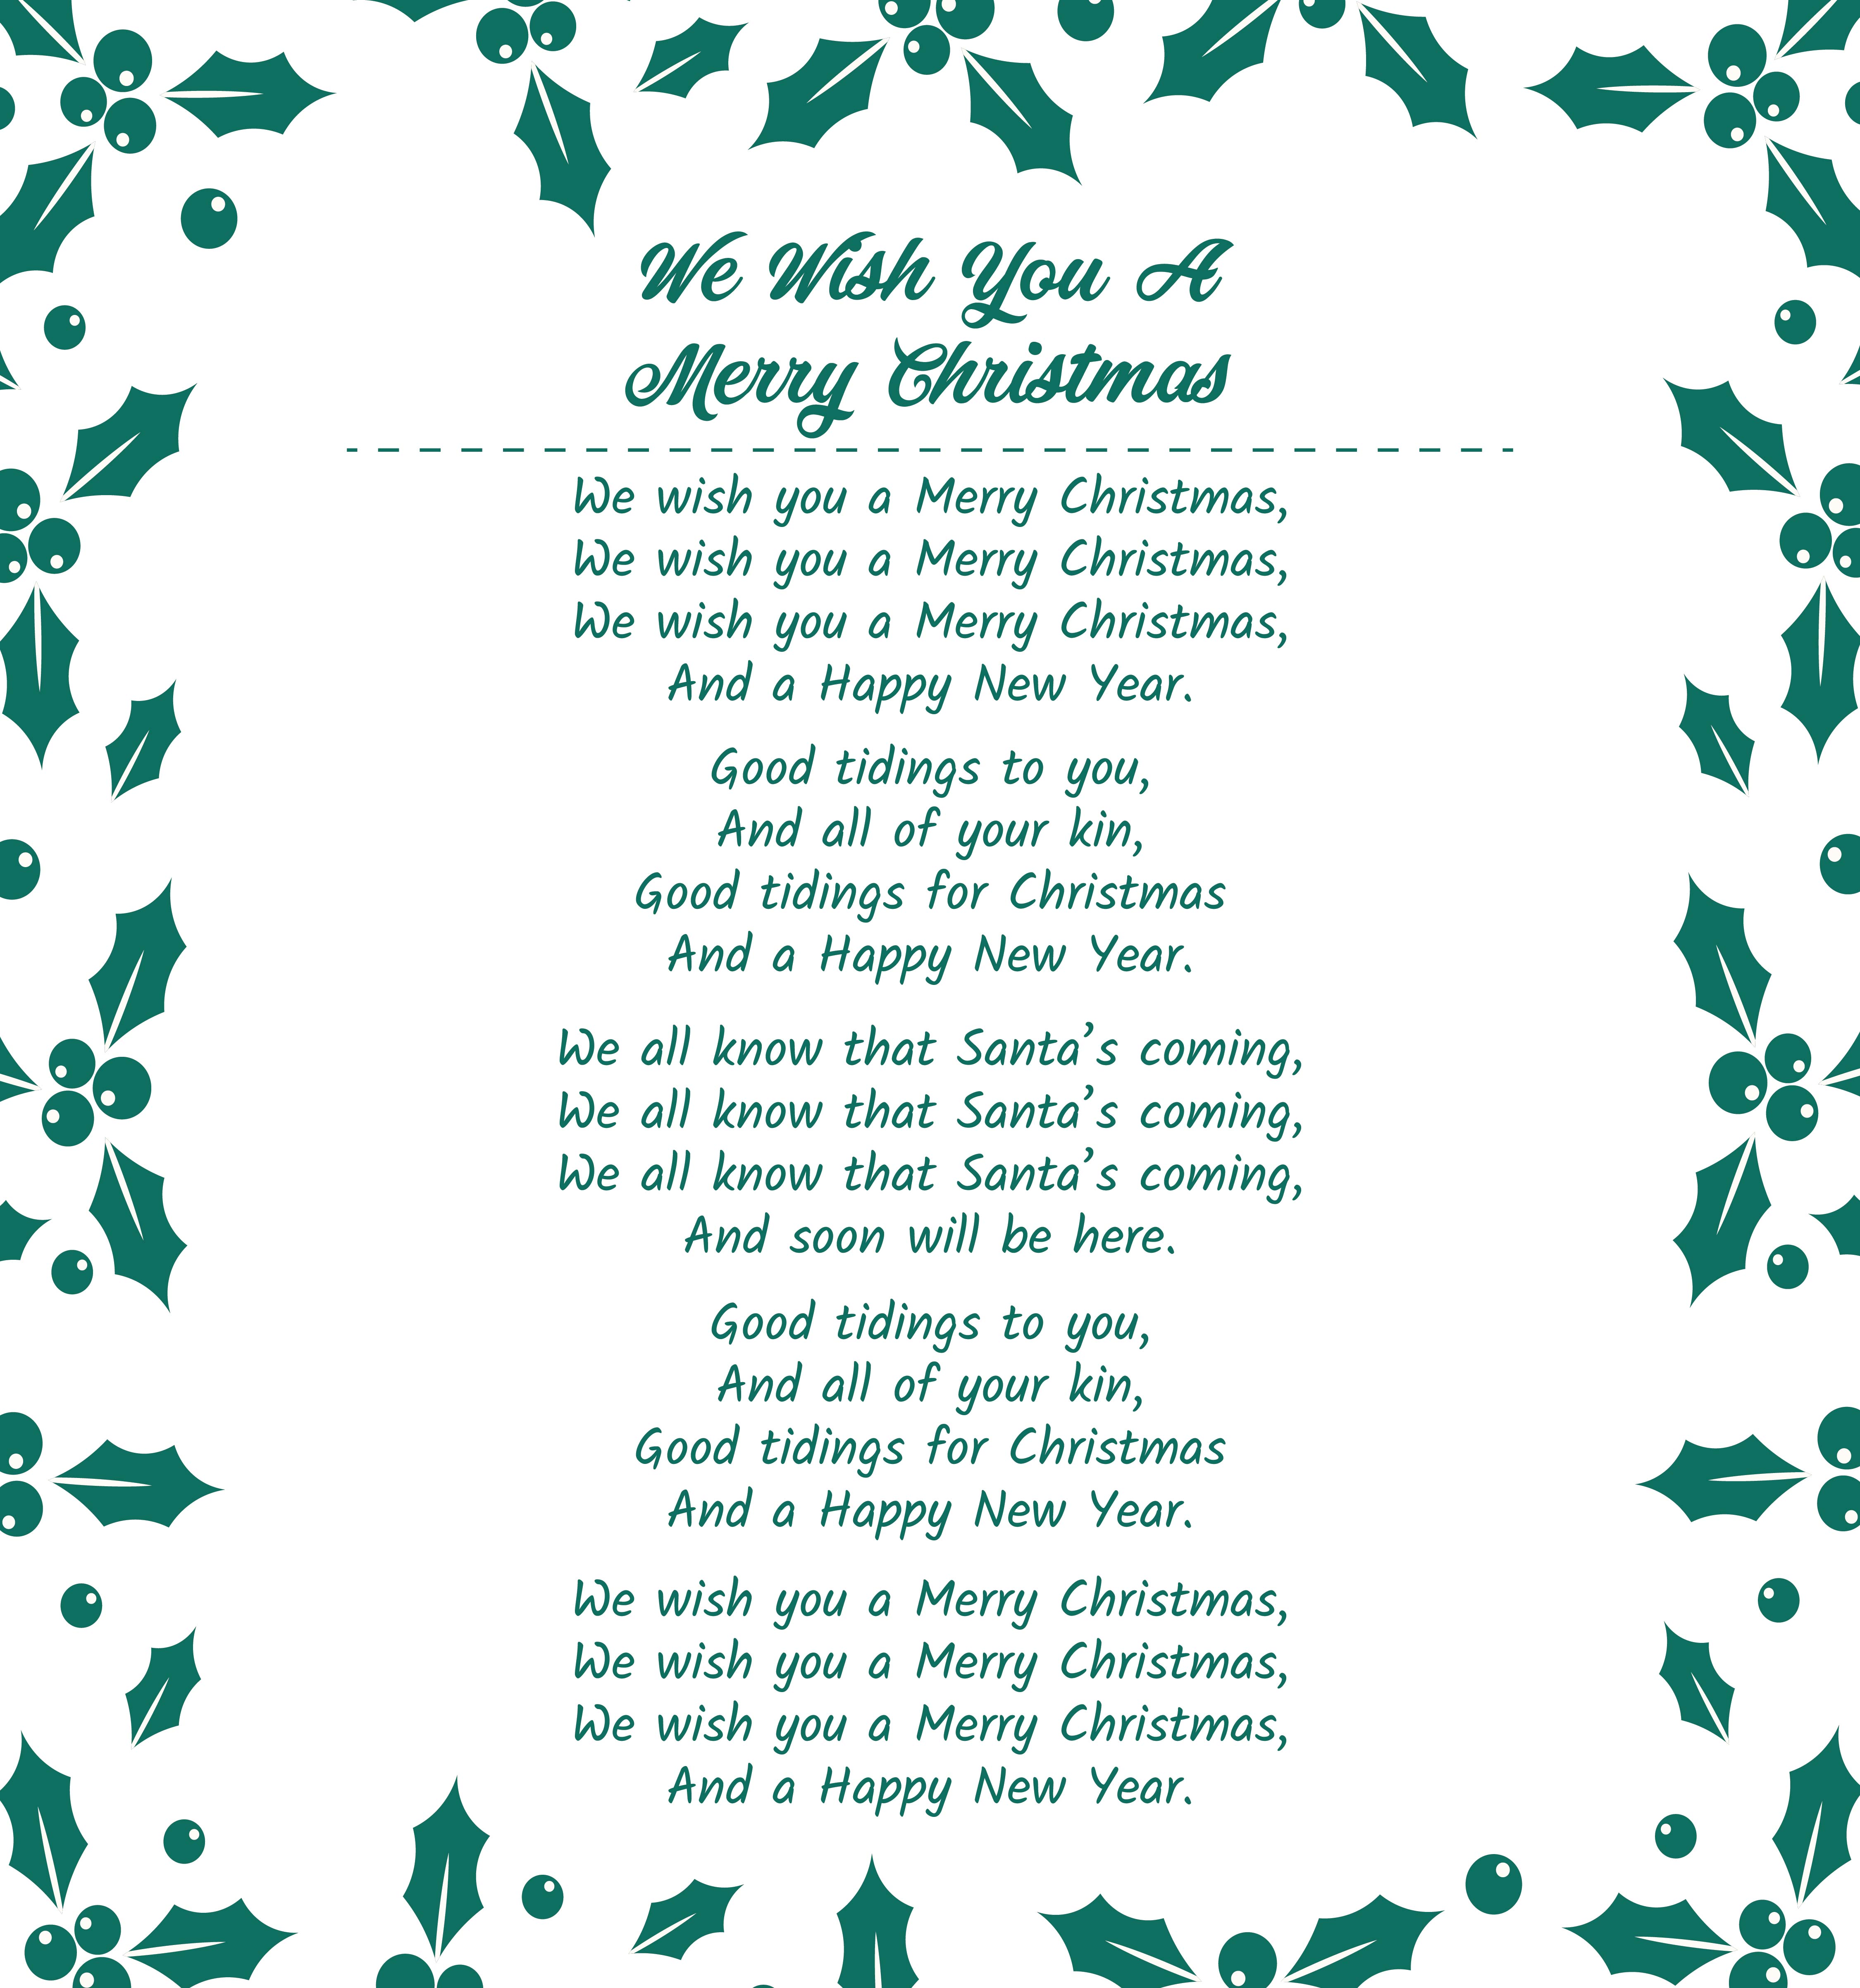 Christmas Carols Lyrics Printable